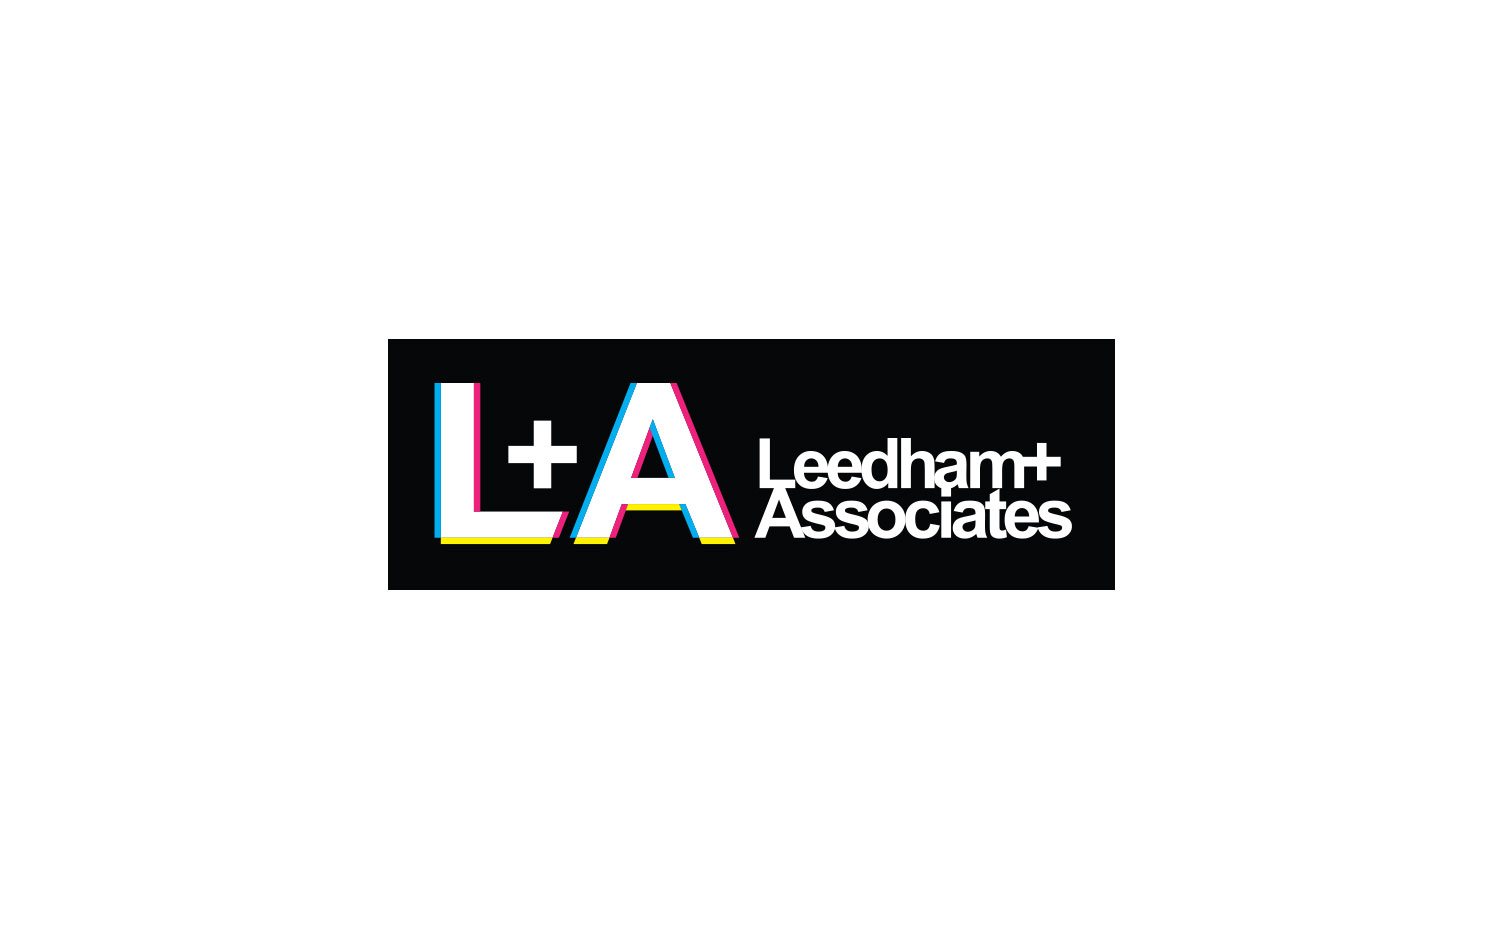 Leedham + Associates